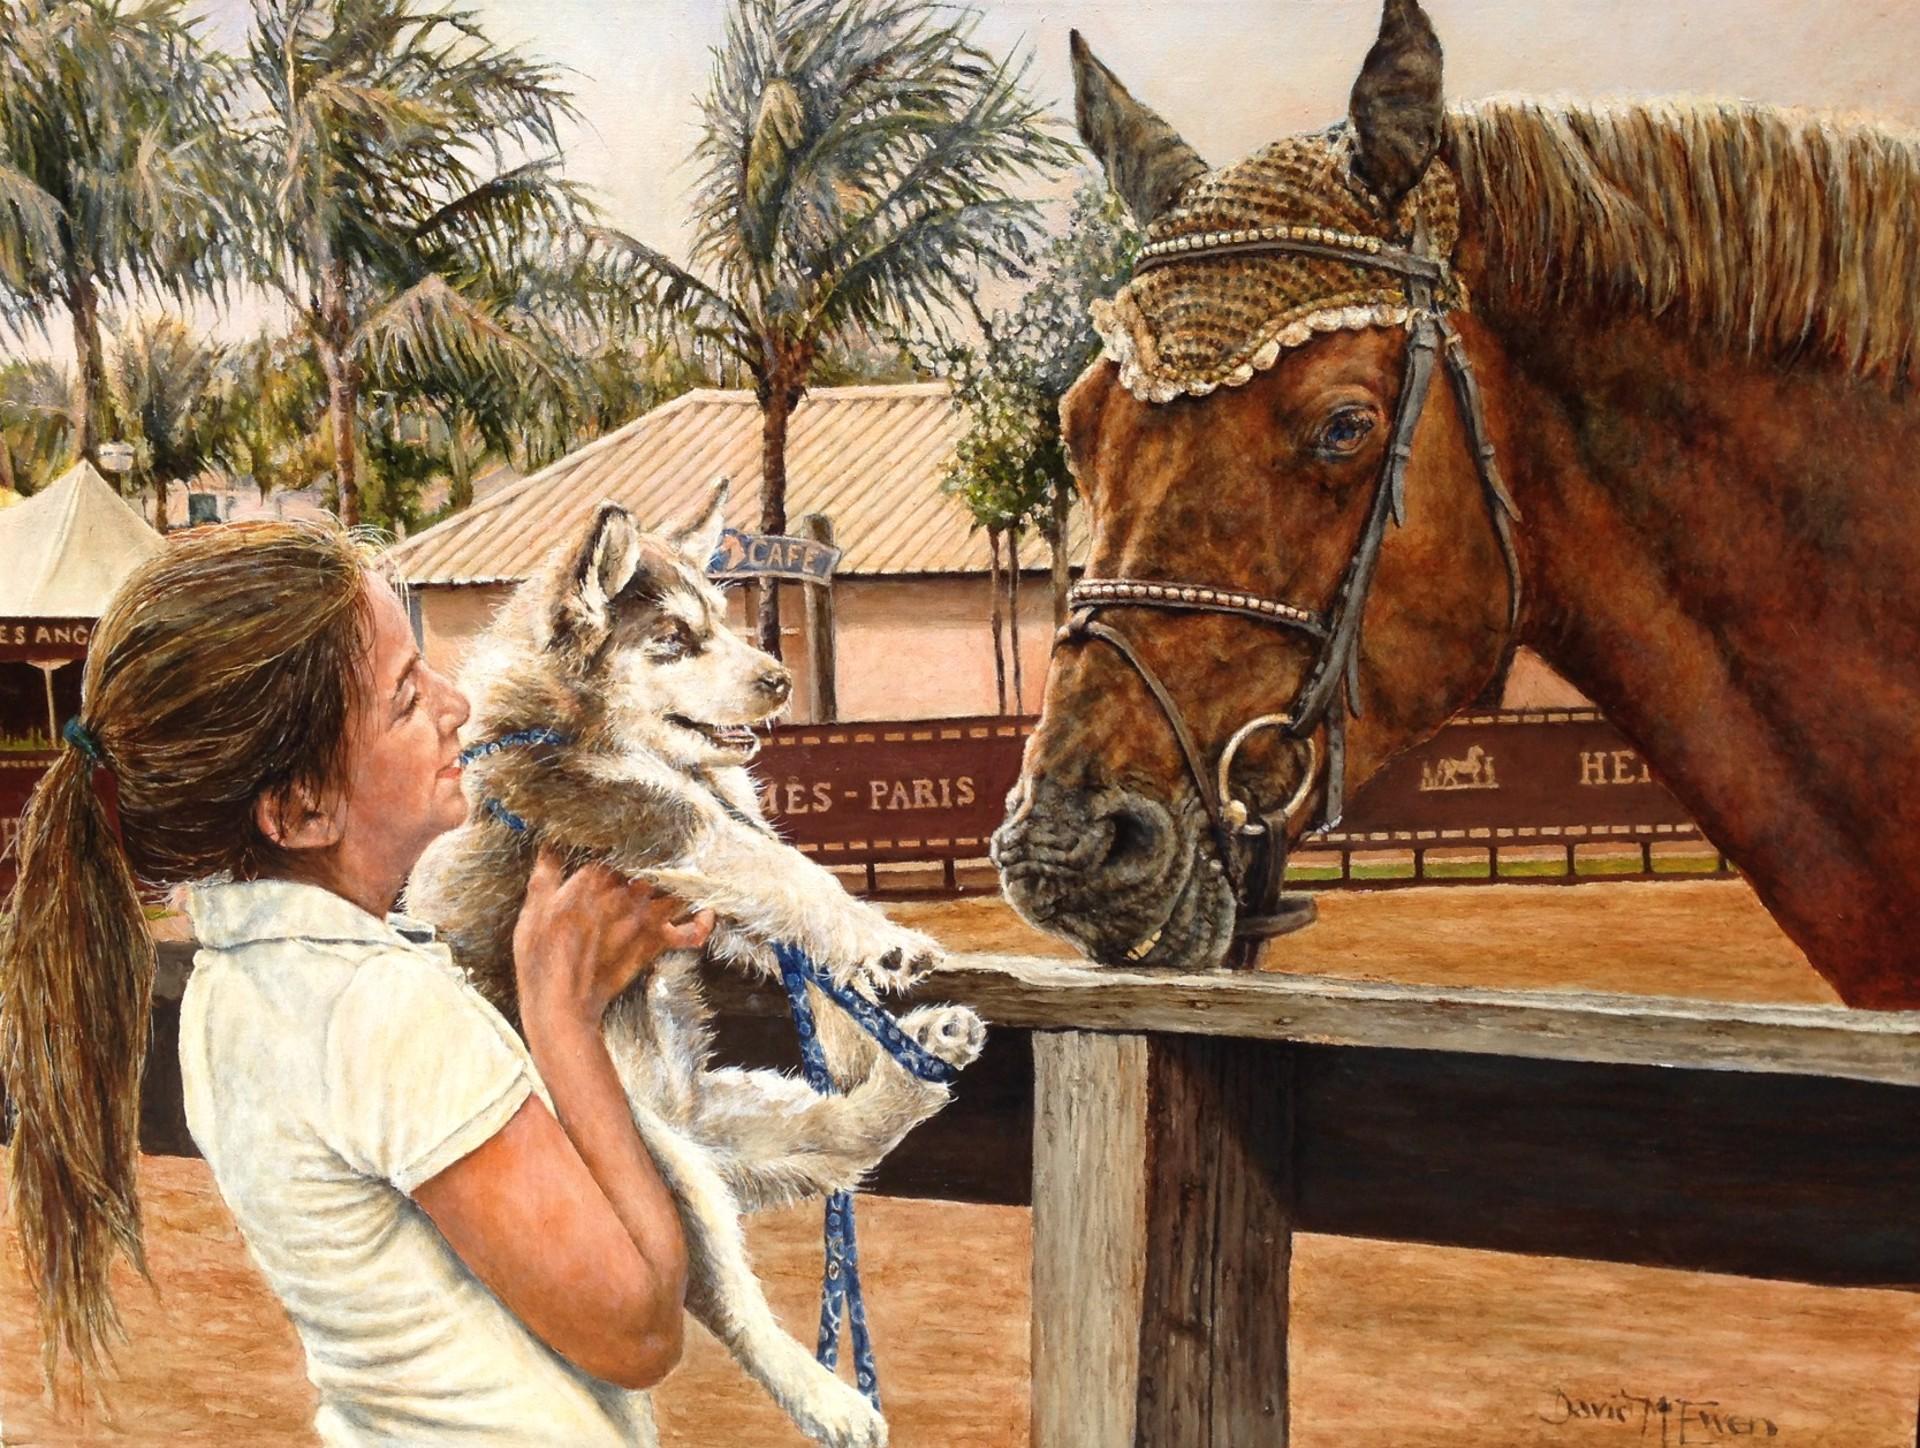 David McEwen Portrait Painting - Wellington, FL oil of hunter/jumper horse, girl and Shepherd dog, "Say Hello"